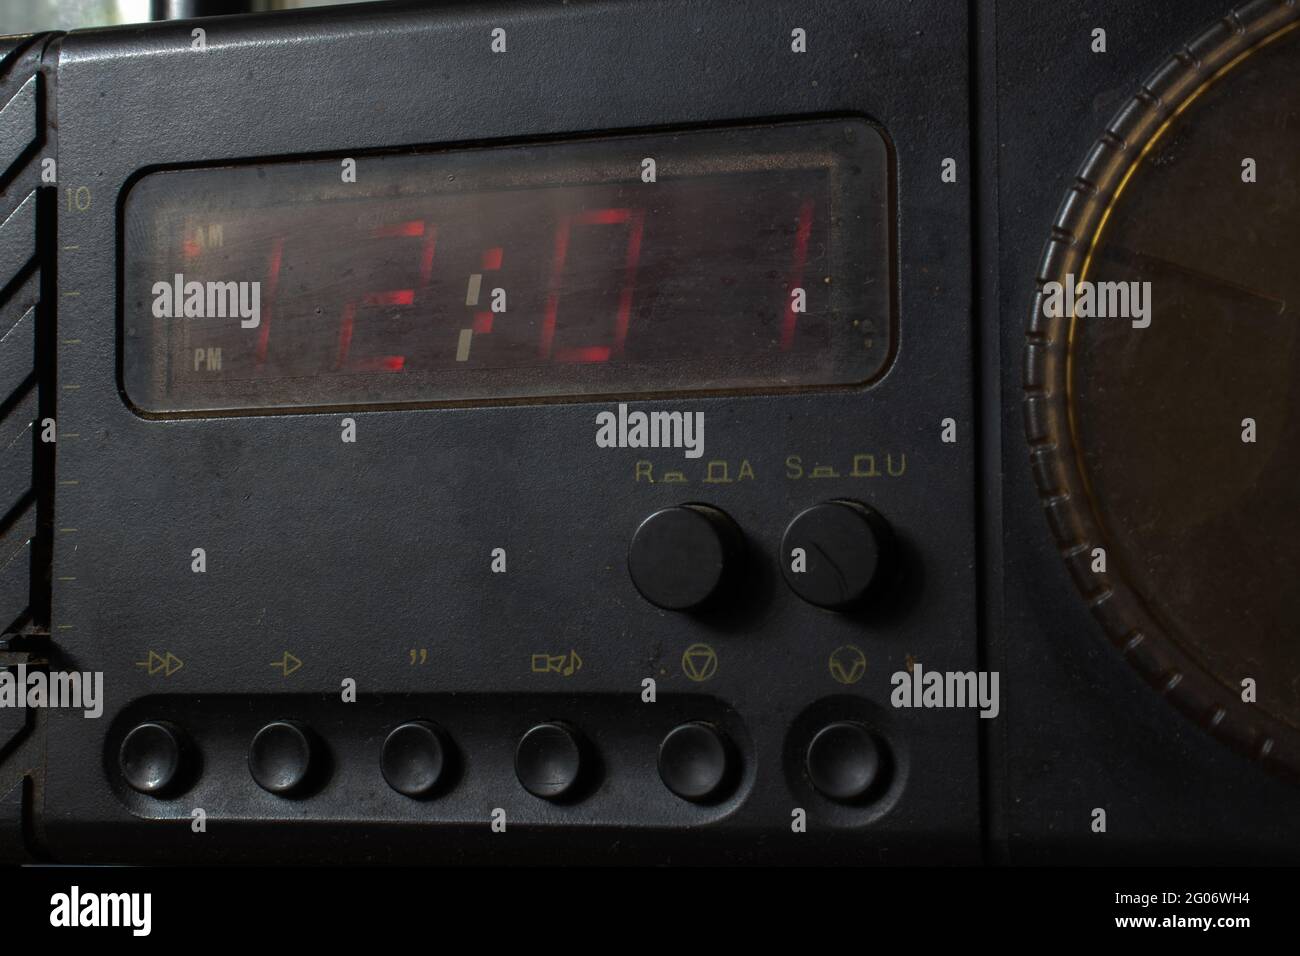 Old clock radio showing 12:01 Stock Photo